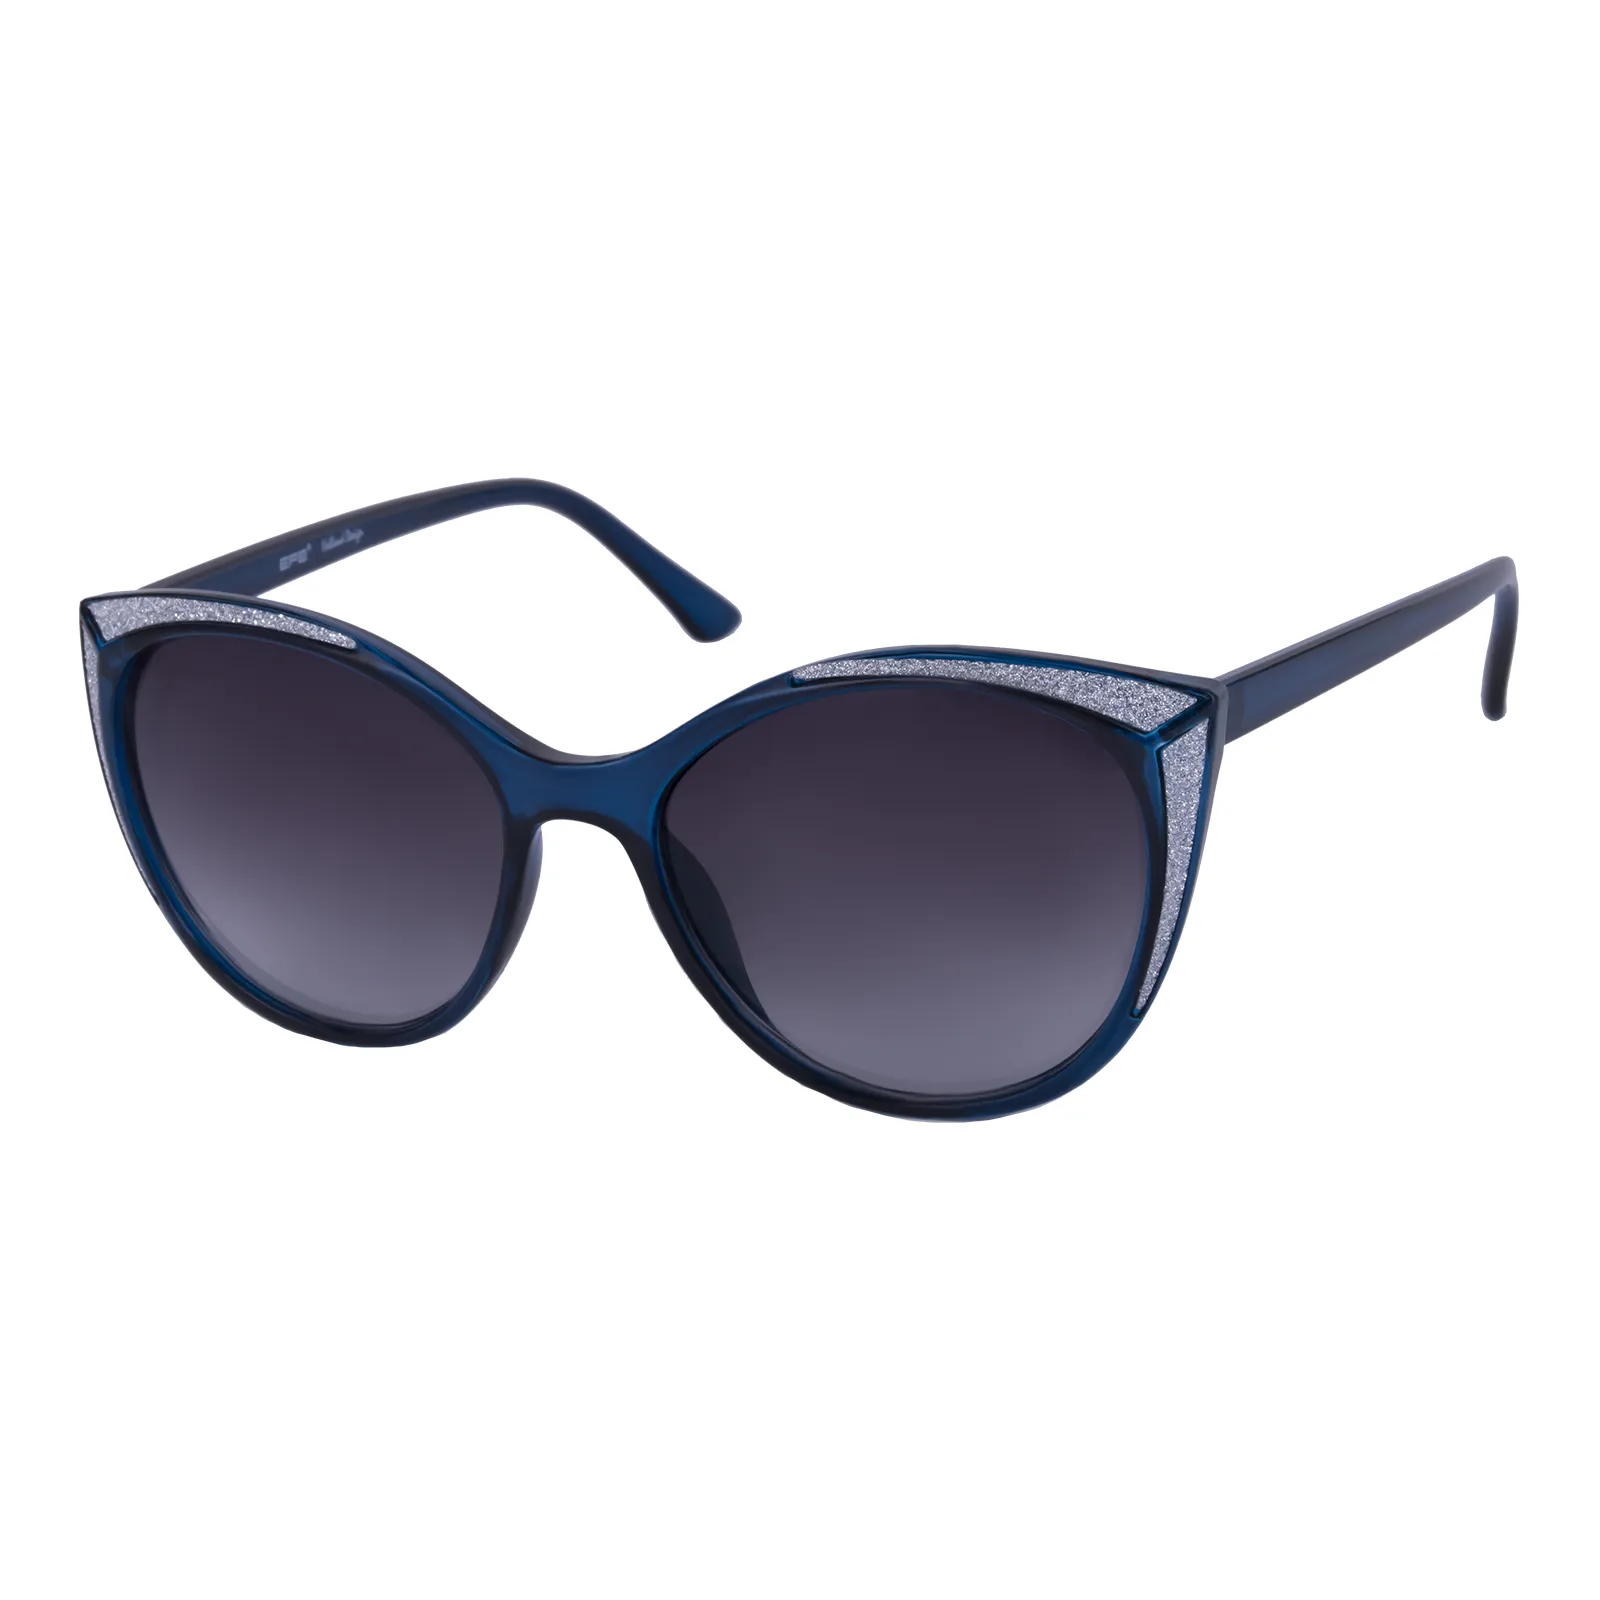 Trudie - Cat-eye Blue Sunglasses for Women